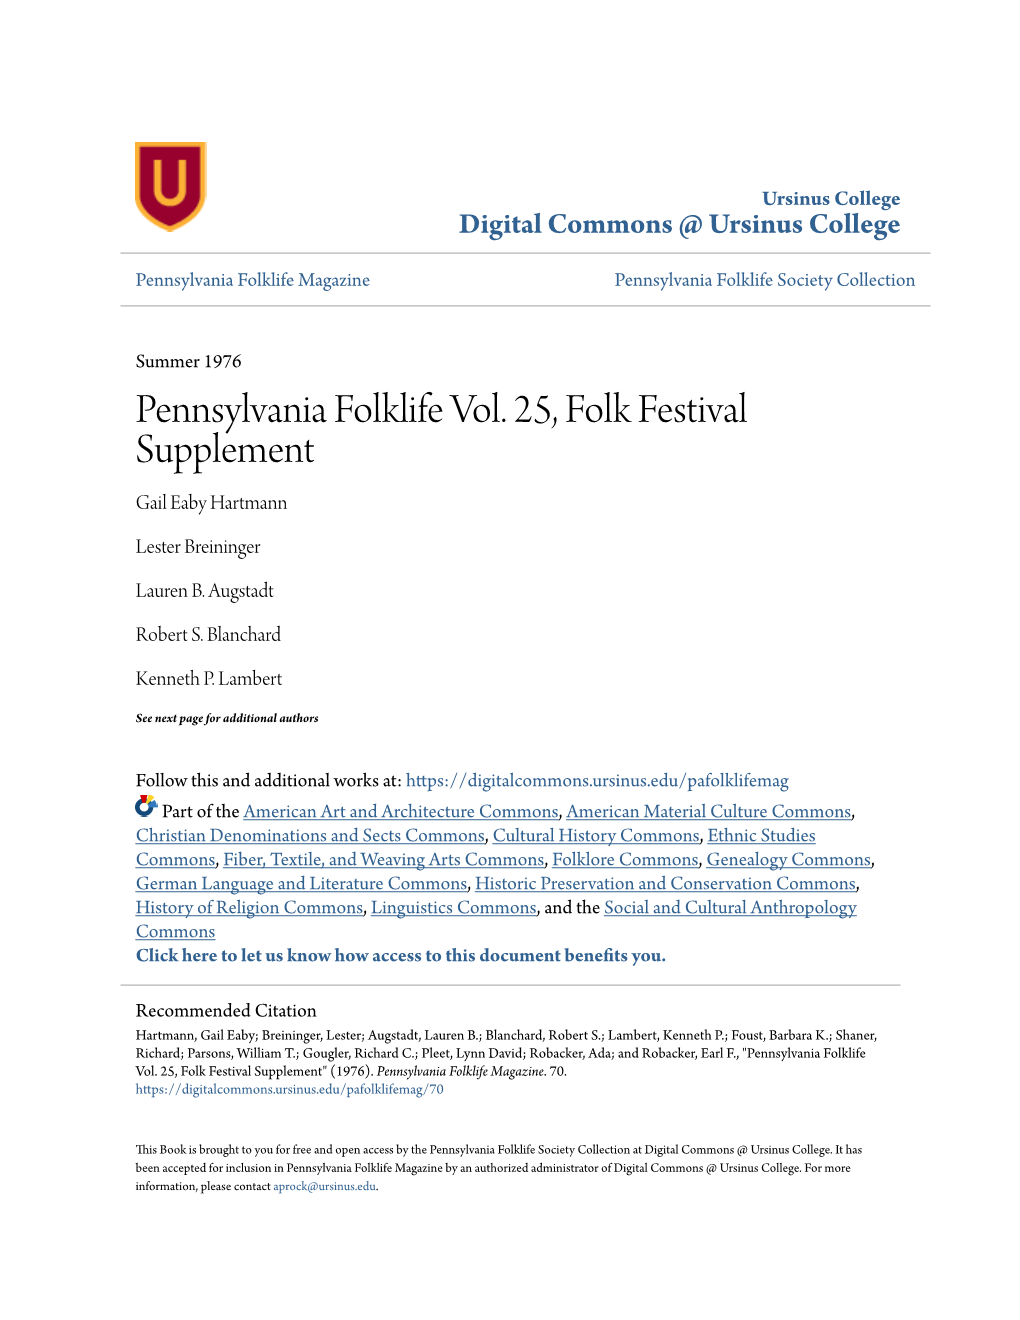 Pennsylvania Folklife Vol. 25, Folk Festival Supplement Gail Eaby Hartmann